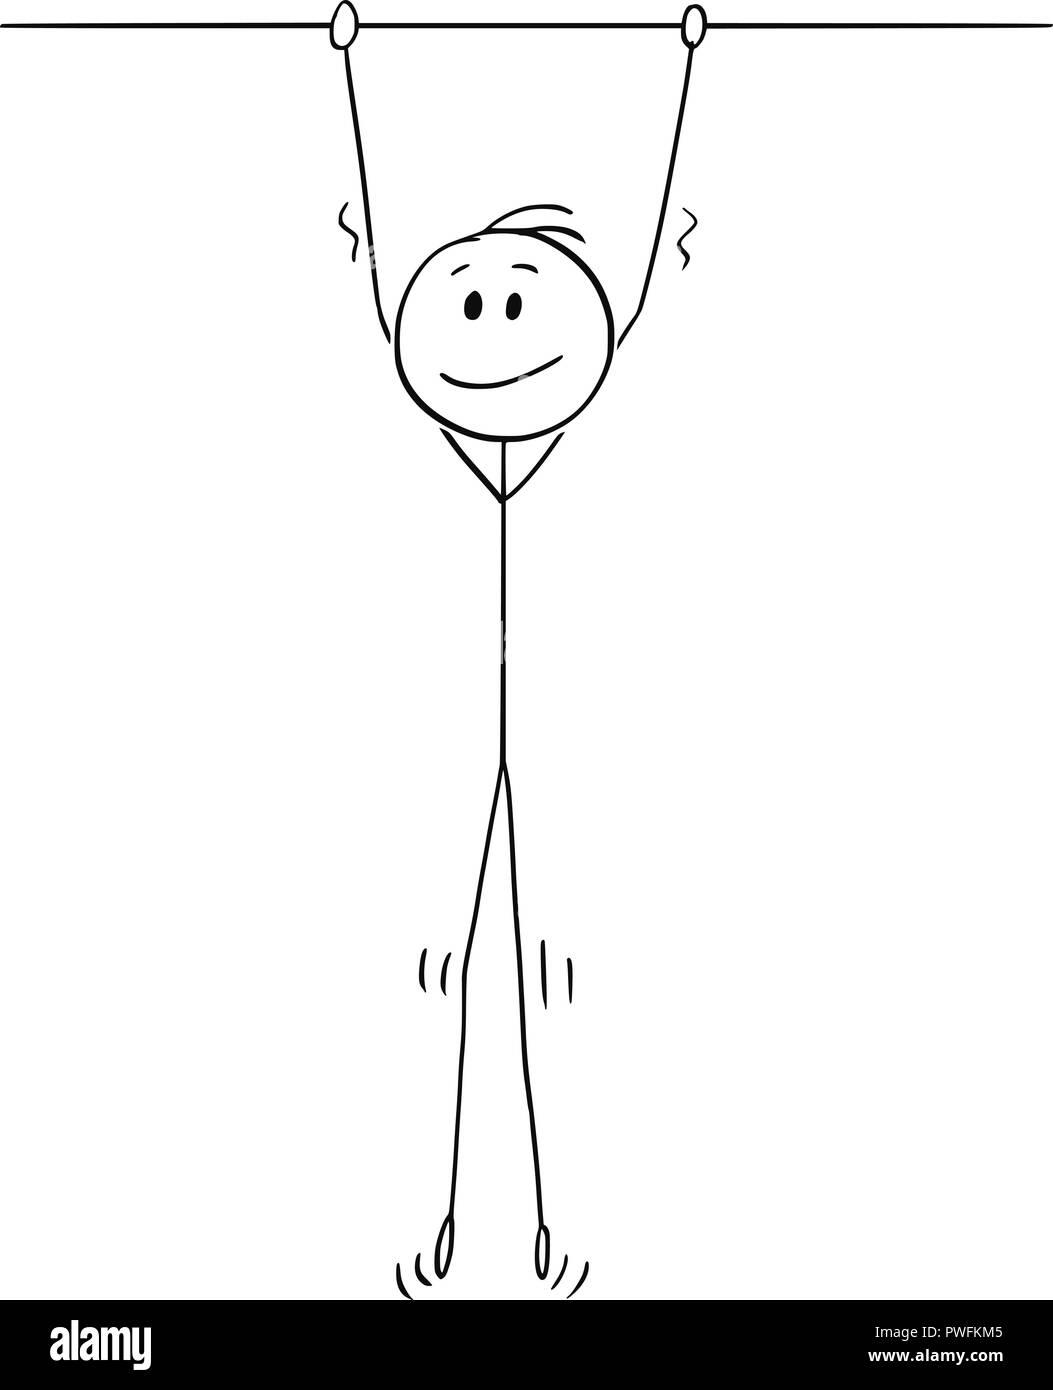 Cartoon of Smiling Man Hanging High Stock Vector